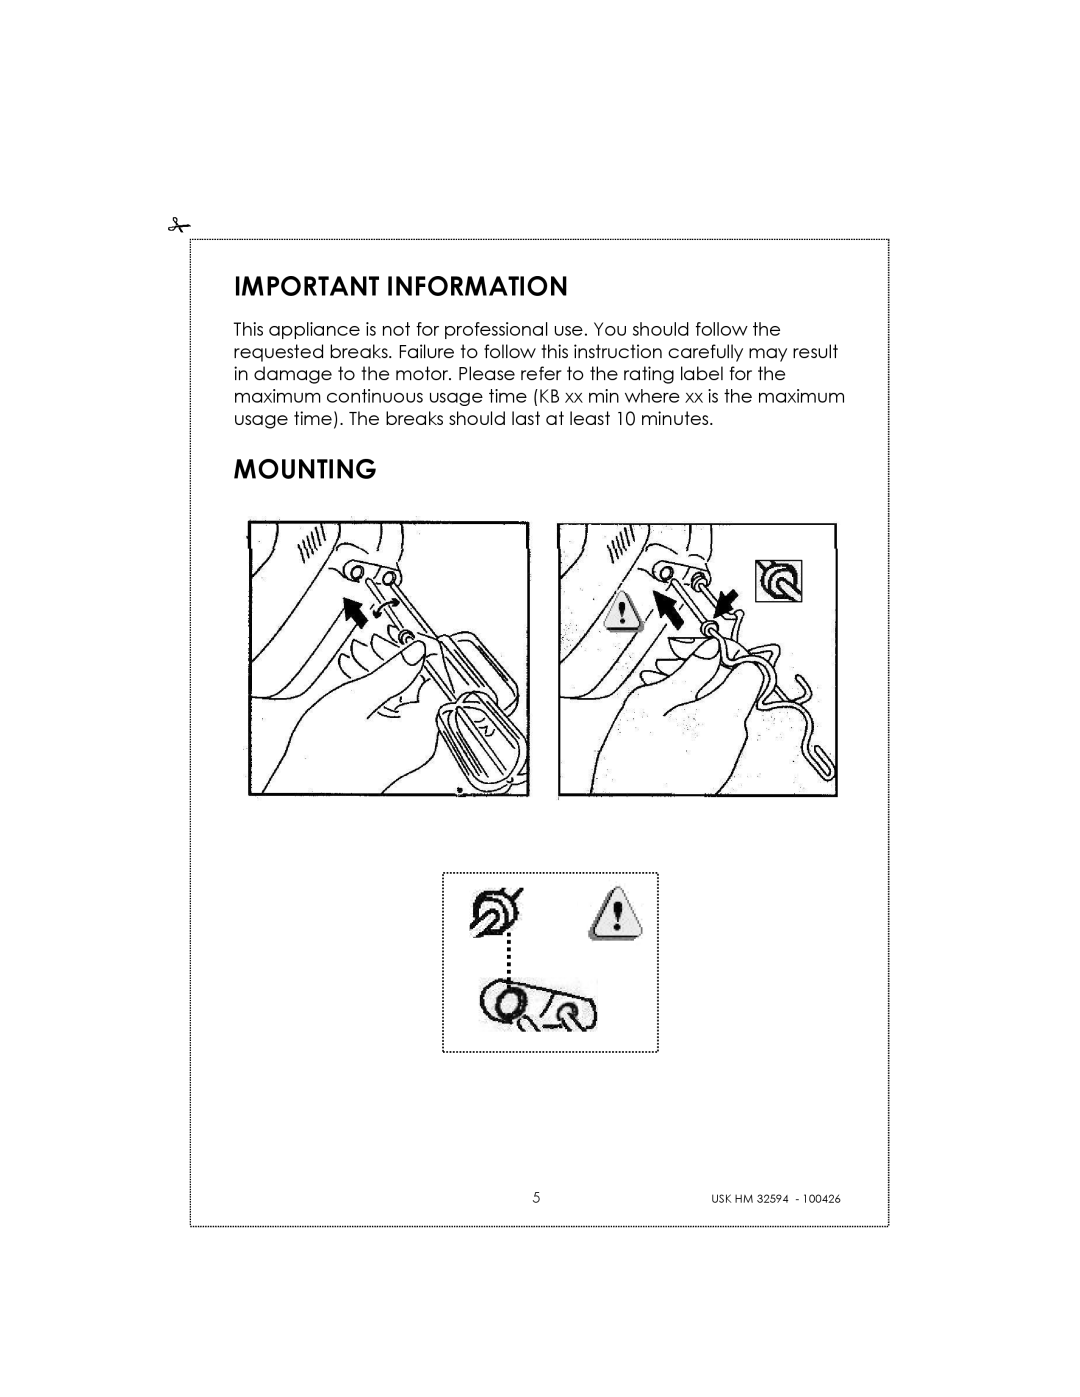 Kalorik USK HM 32594 manual Important Information, Mounting, Usk Hm 